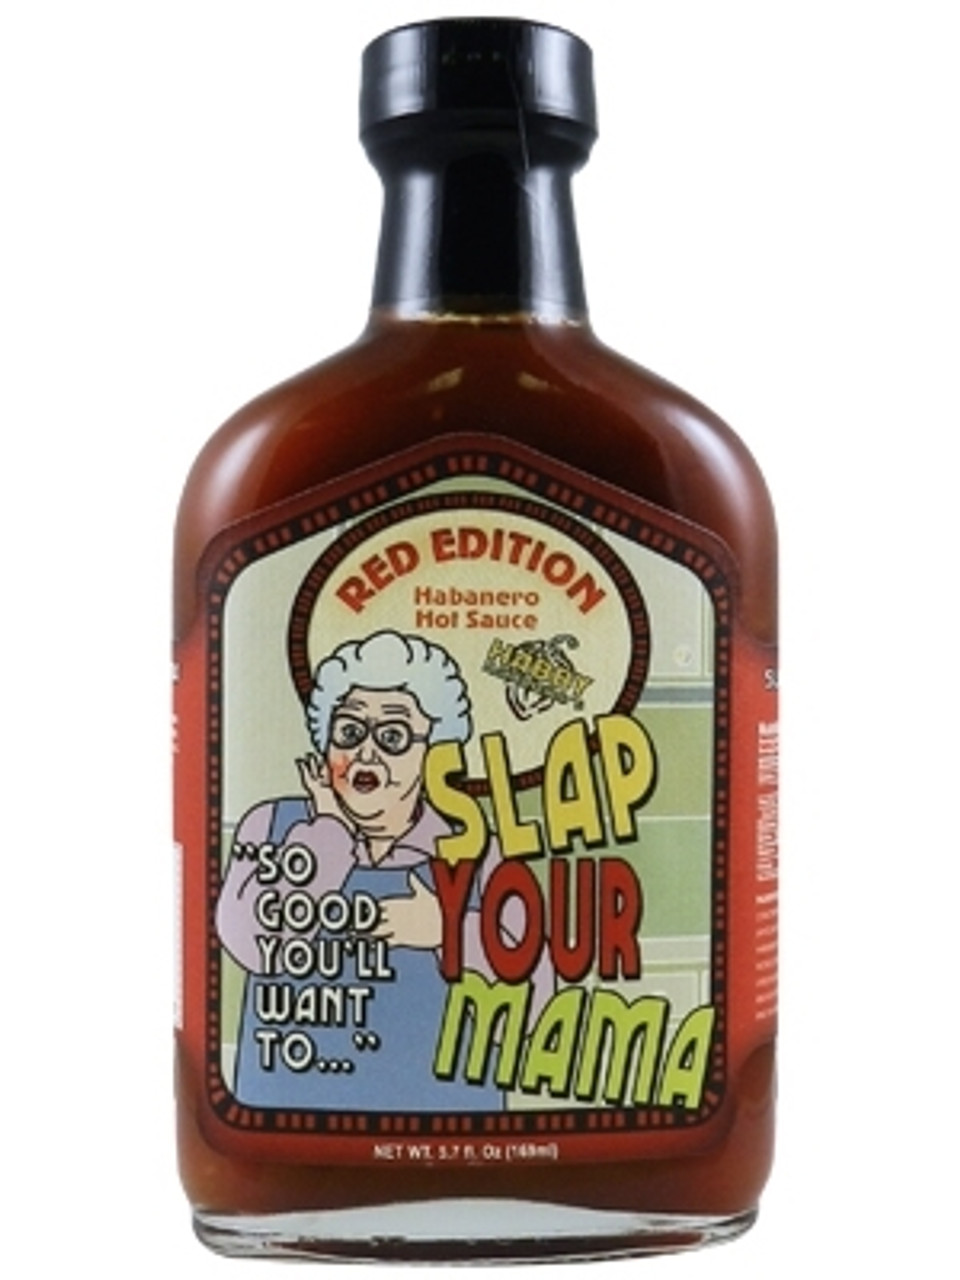 Slap Your Mama Red Edition Habanero Hot Sauce, 5.7oz.